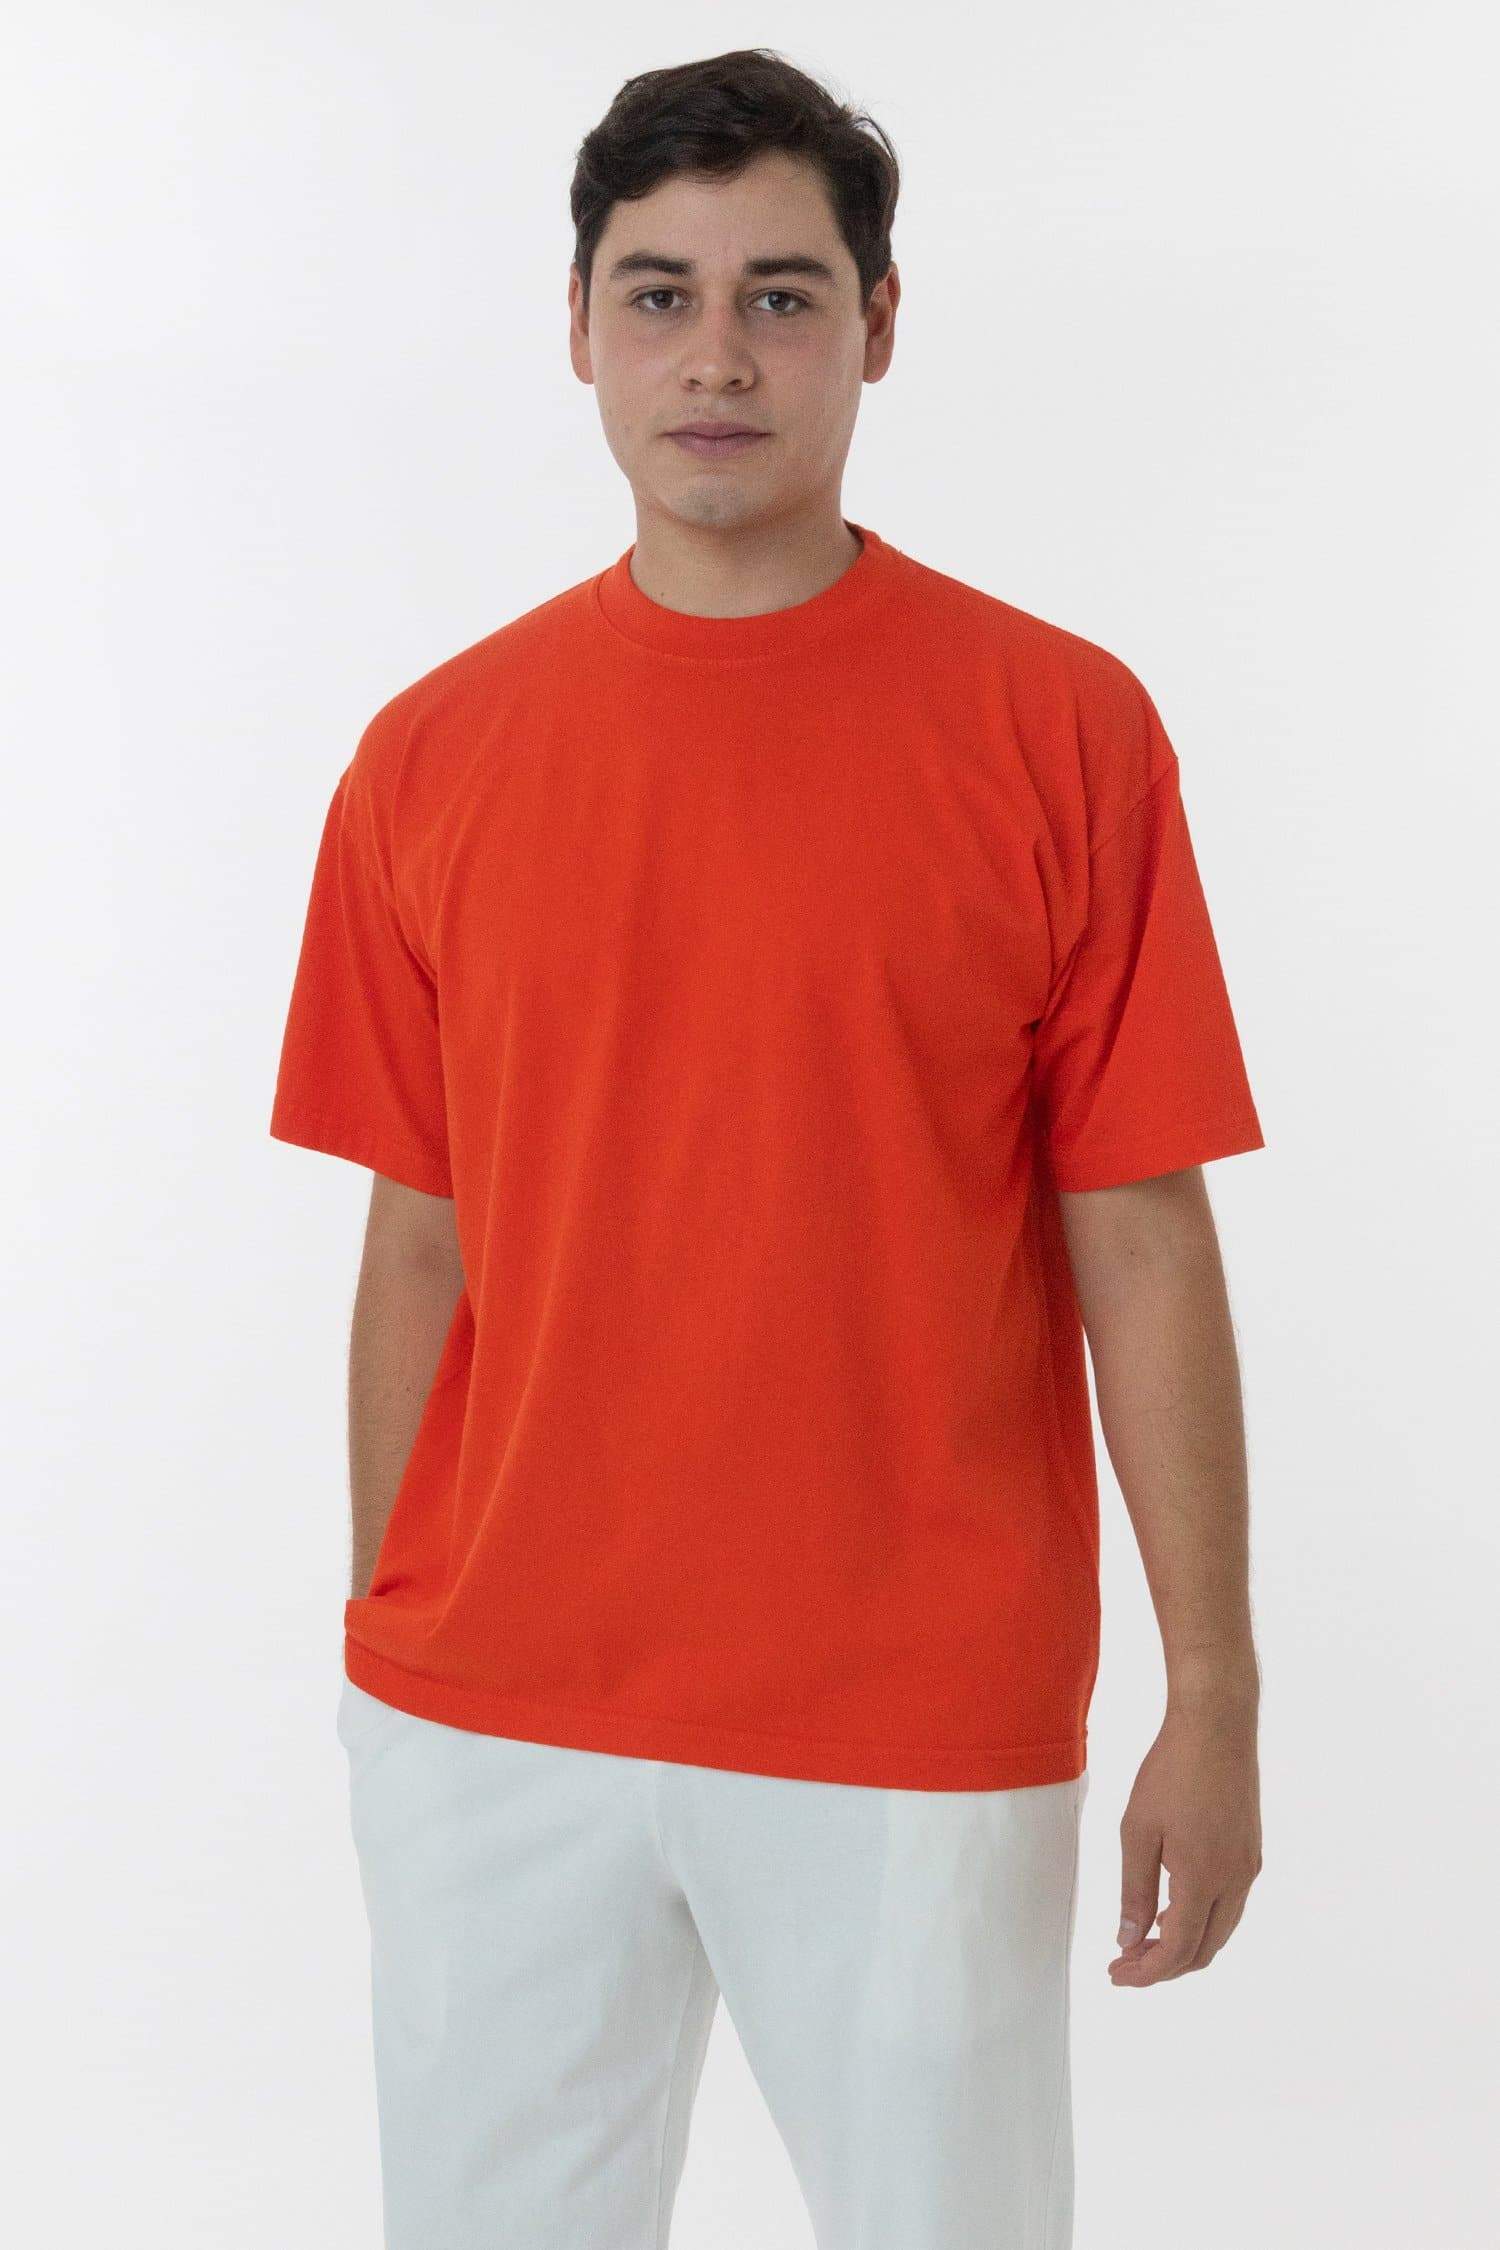 Apparel 1801 Dye 1 T-Shirt - – Garment Crew of (Colors Los 6.5oz Angeles Neck The 3)